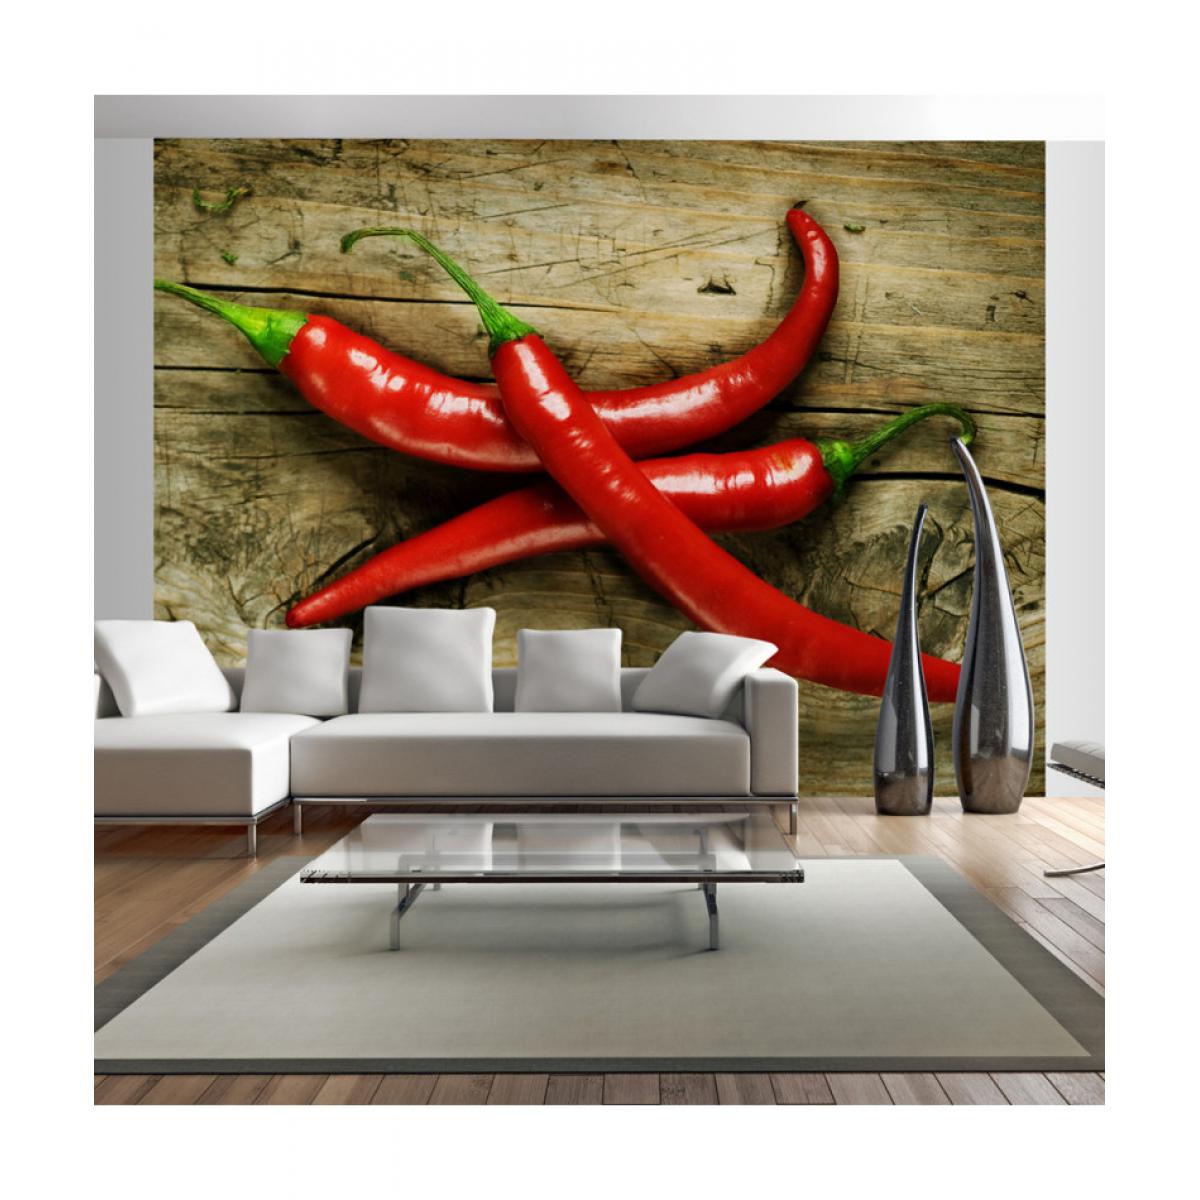 Artgeist - Papier peint - Spicy chili peppers 400x309 - Papier peint